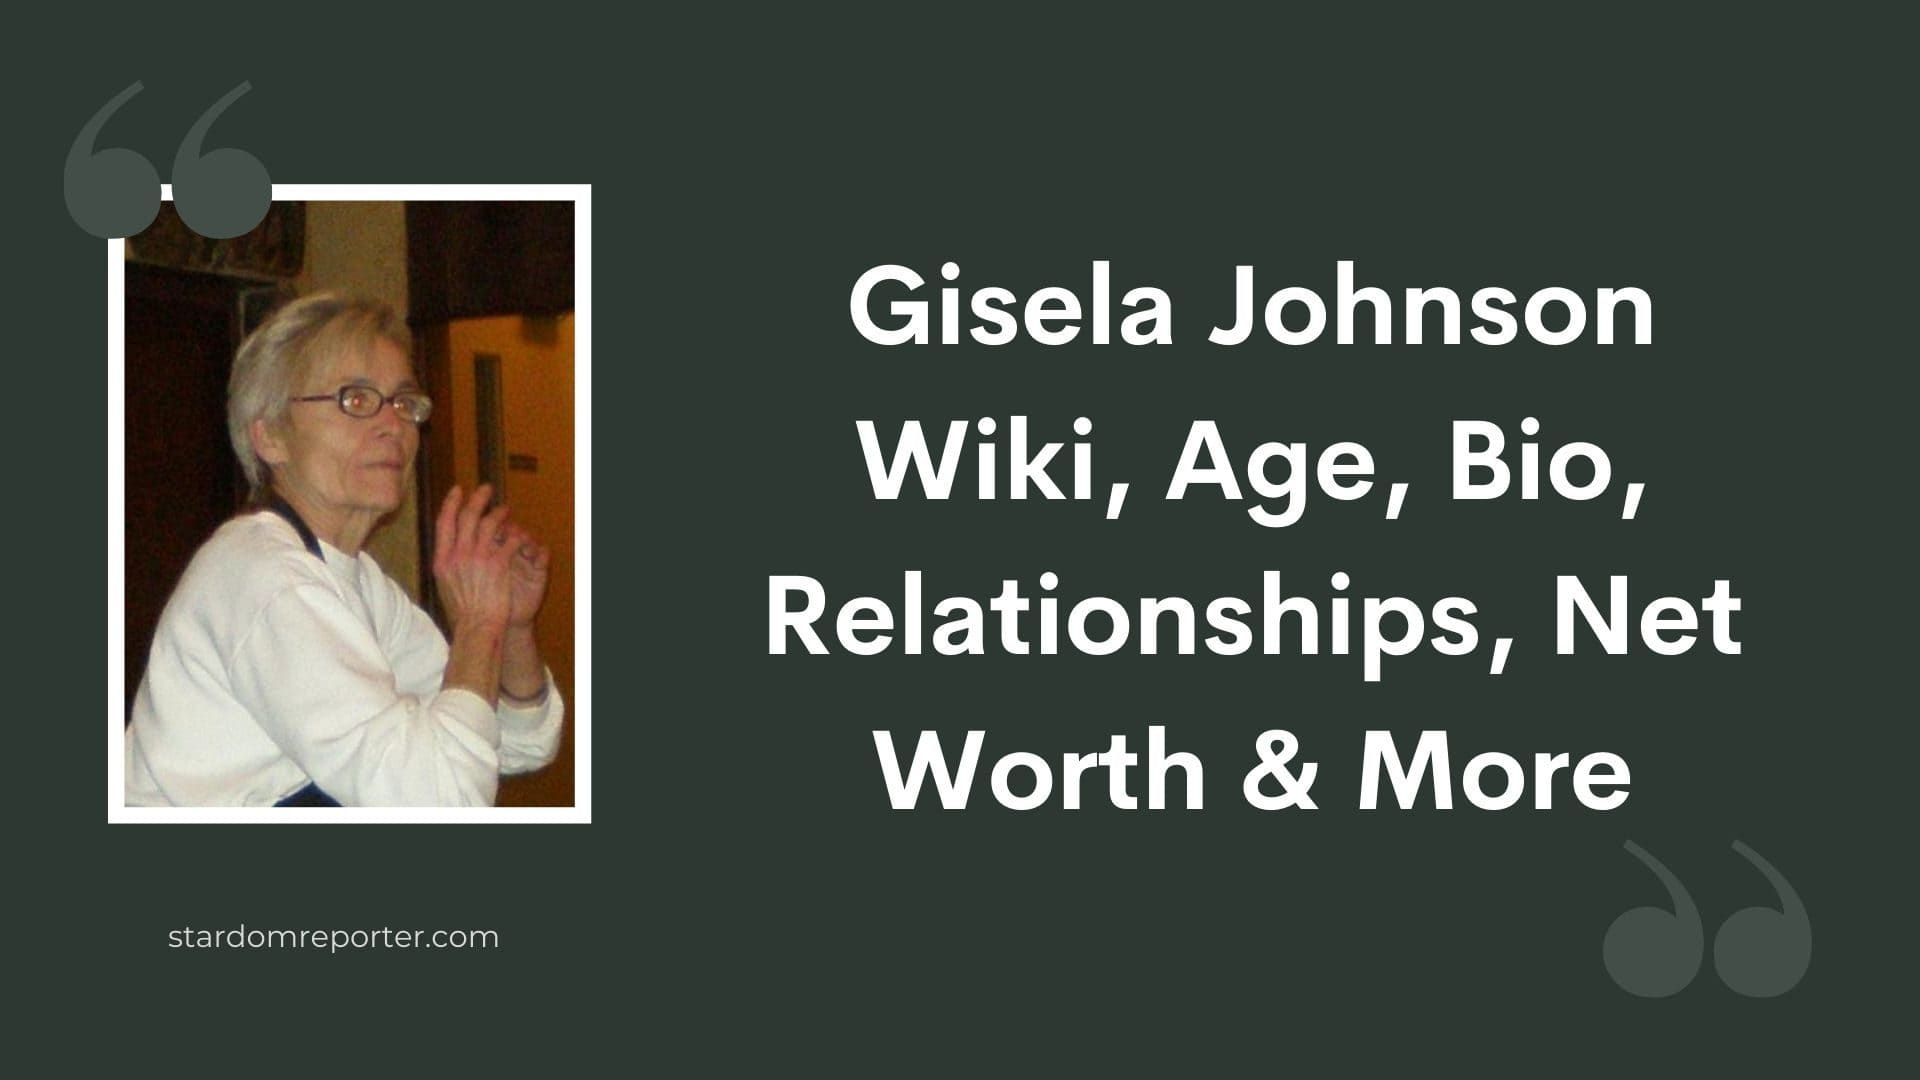 Gisela Johnson Wiki, Age, Bio, Relationships, Net Worth & More - 11